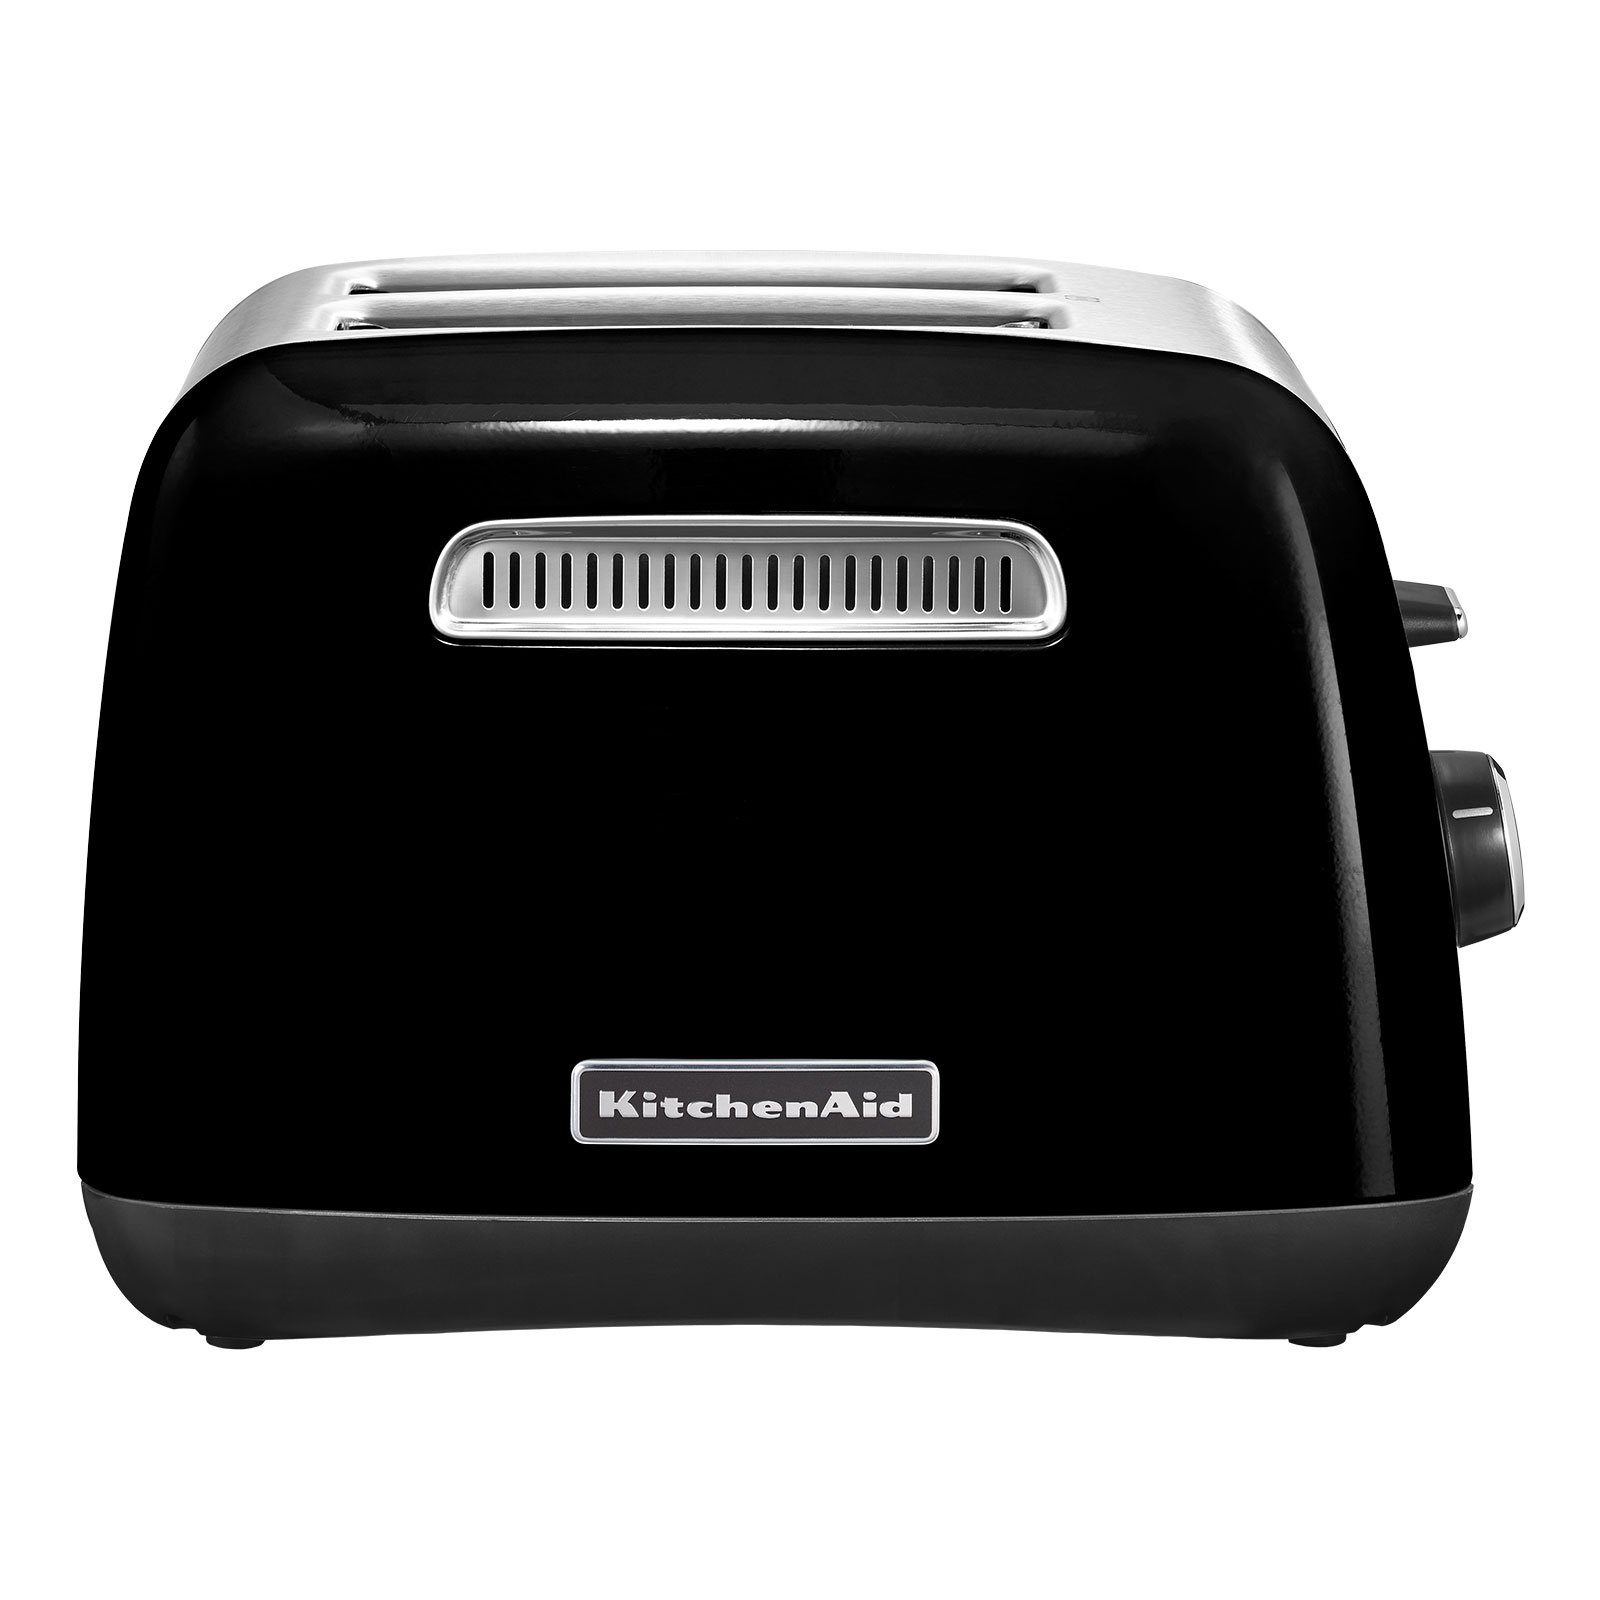 W KitchenAid Toaster 5KMT2115 1100 2-Scheiben-Toaster,